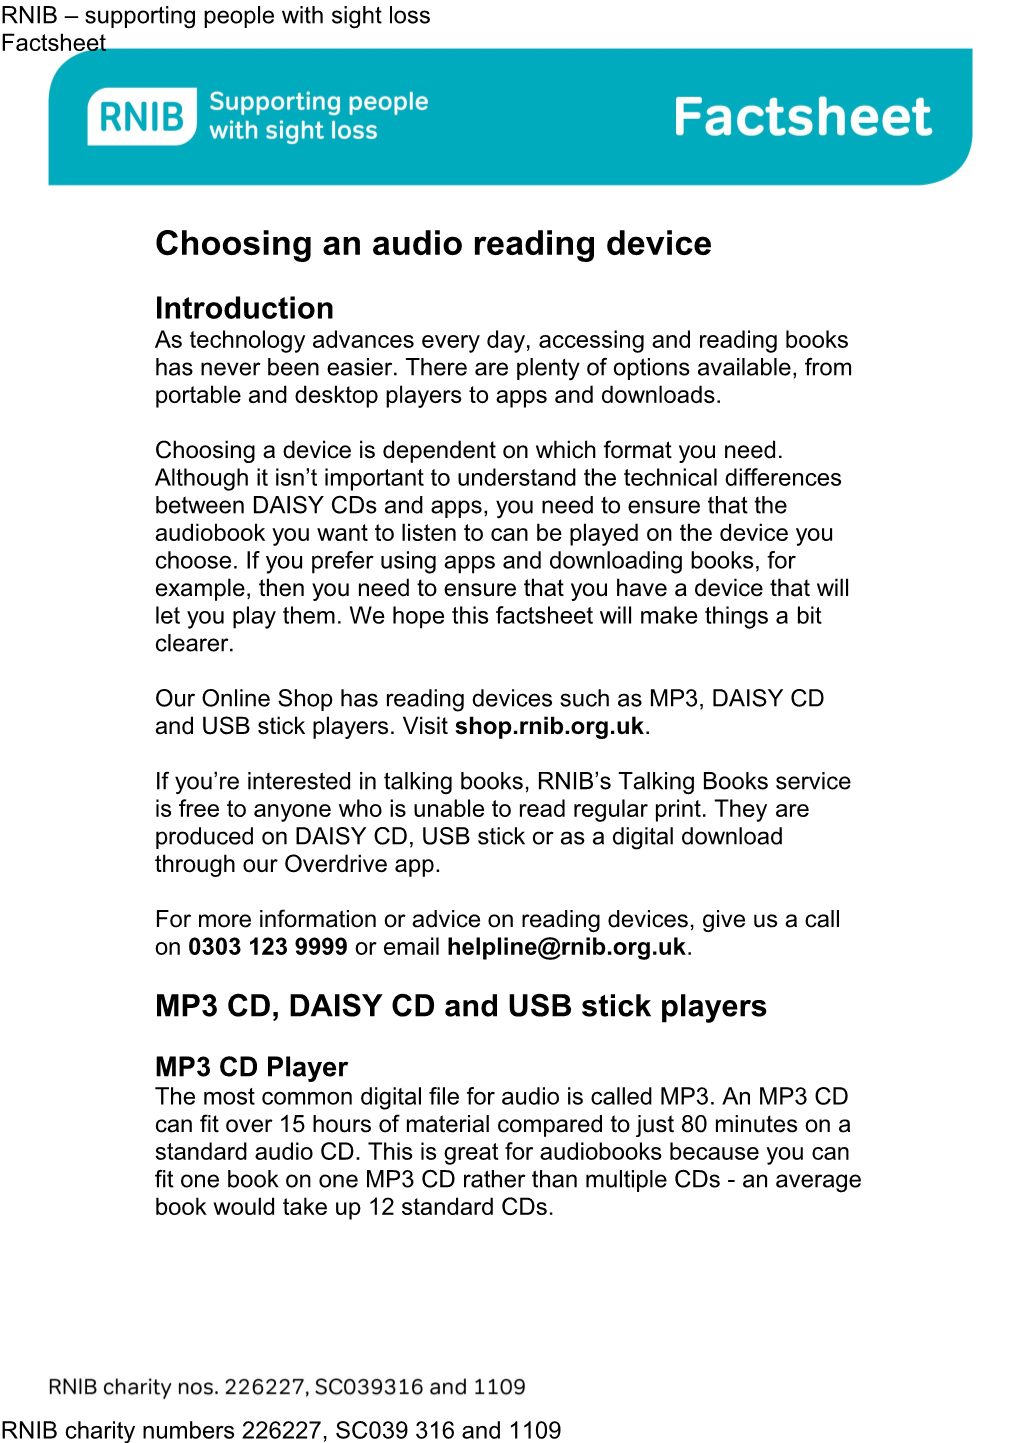 Choosing an MP3, DAISY CD Or USB Stick Player